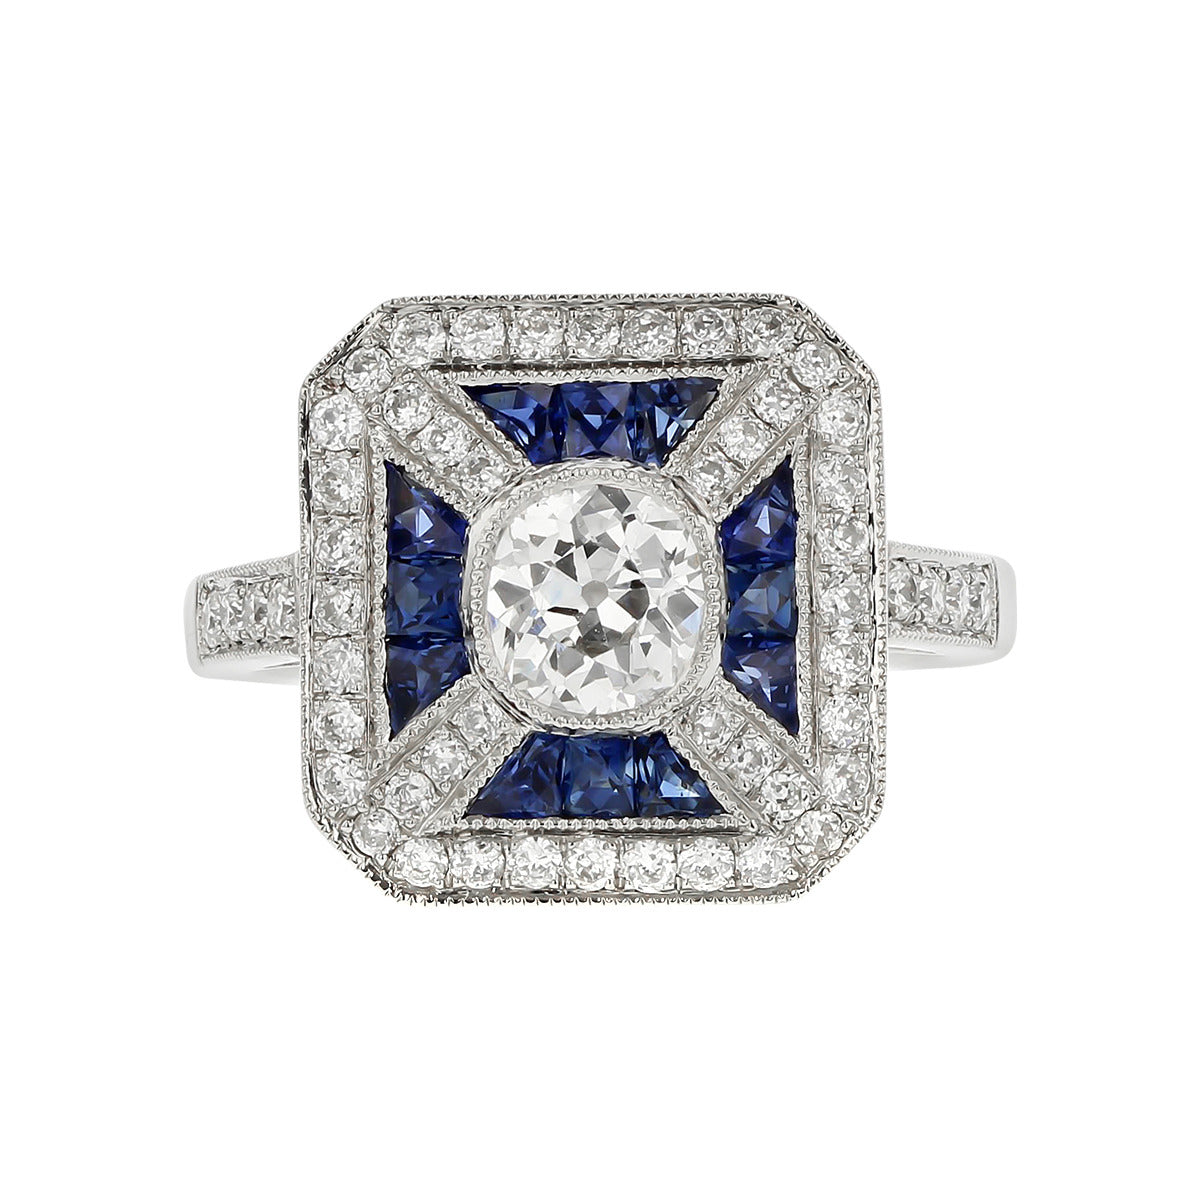 DARDASHTI, Art Deco Style Diamond Ring with Sapphire Accents